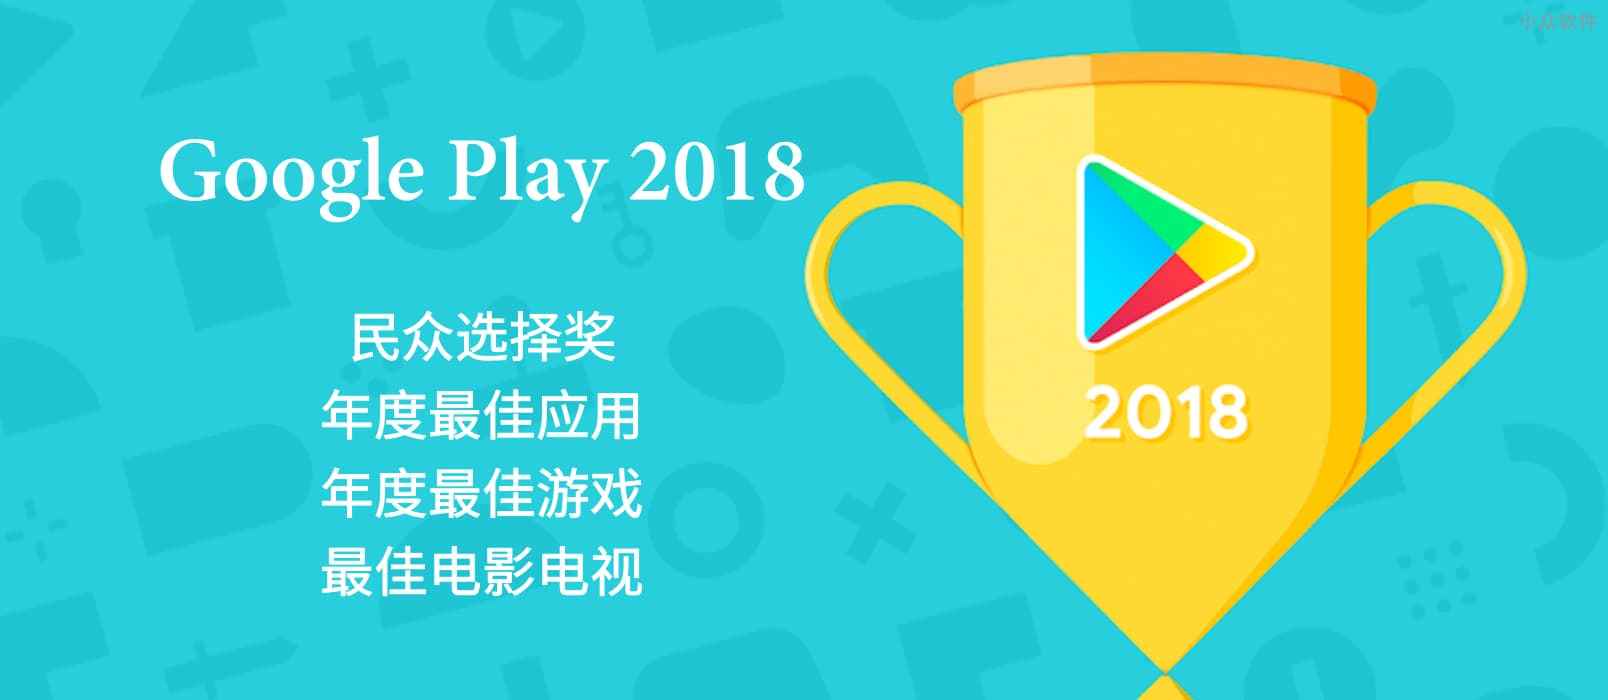 Google Play 的 2018 年最佳应用、最佳游戏、最佳电影等榜单发布 1